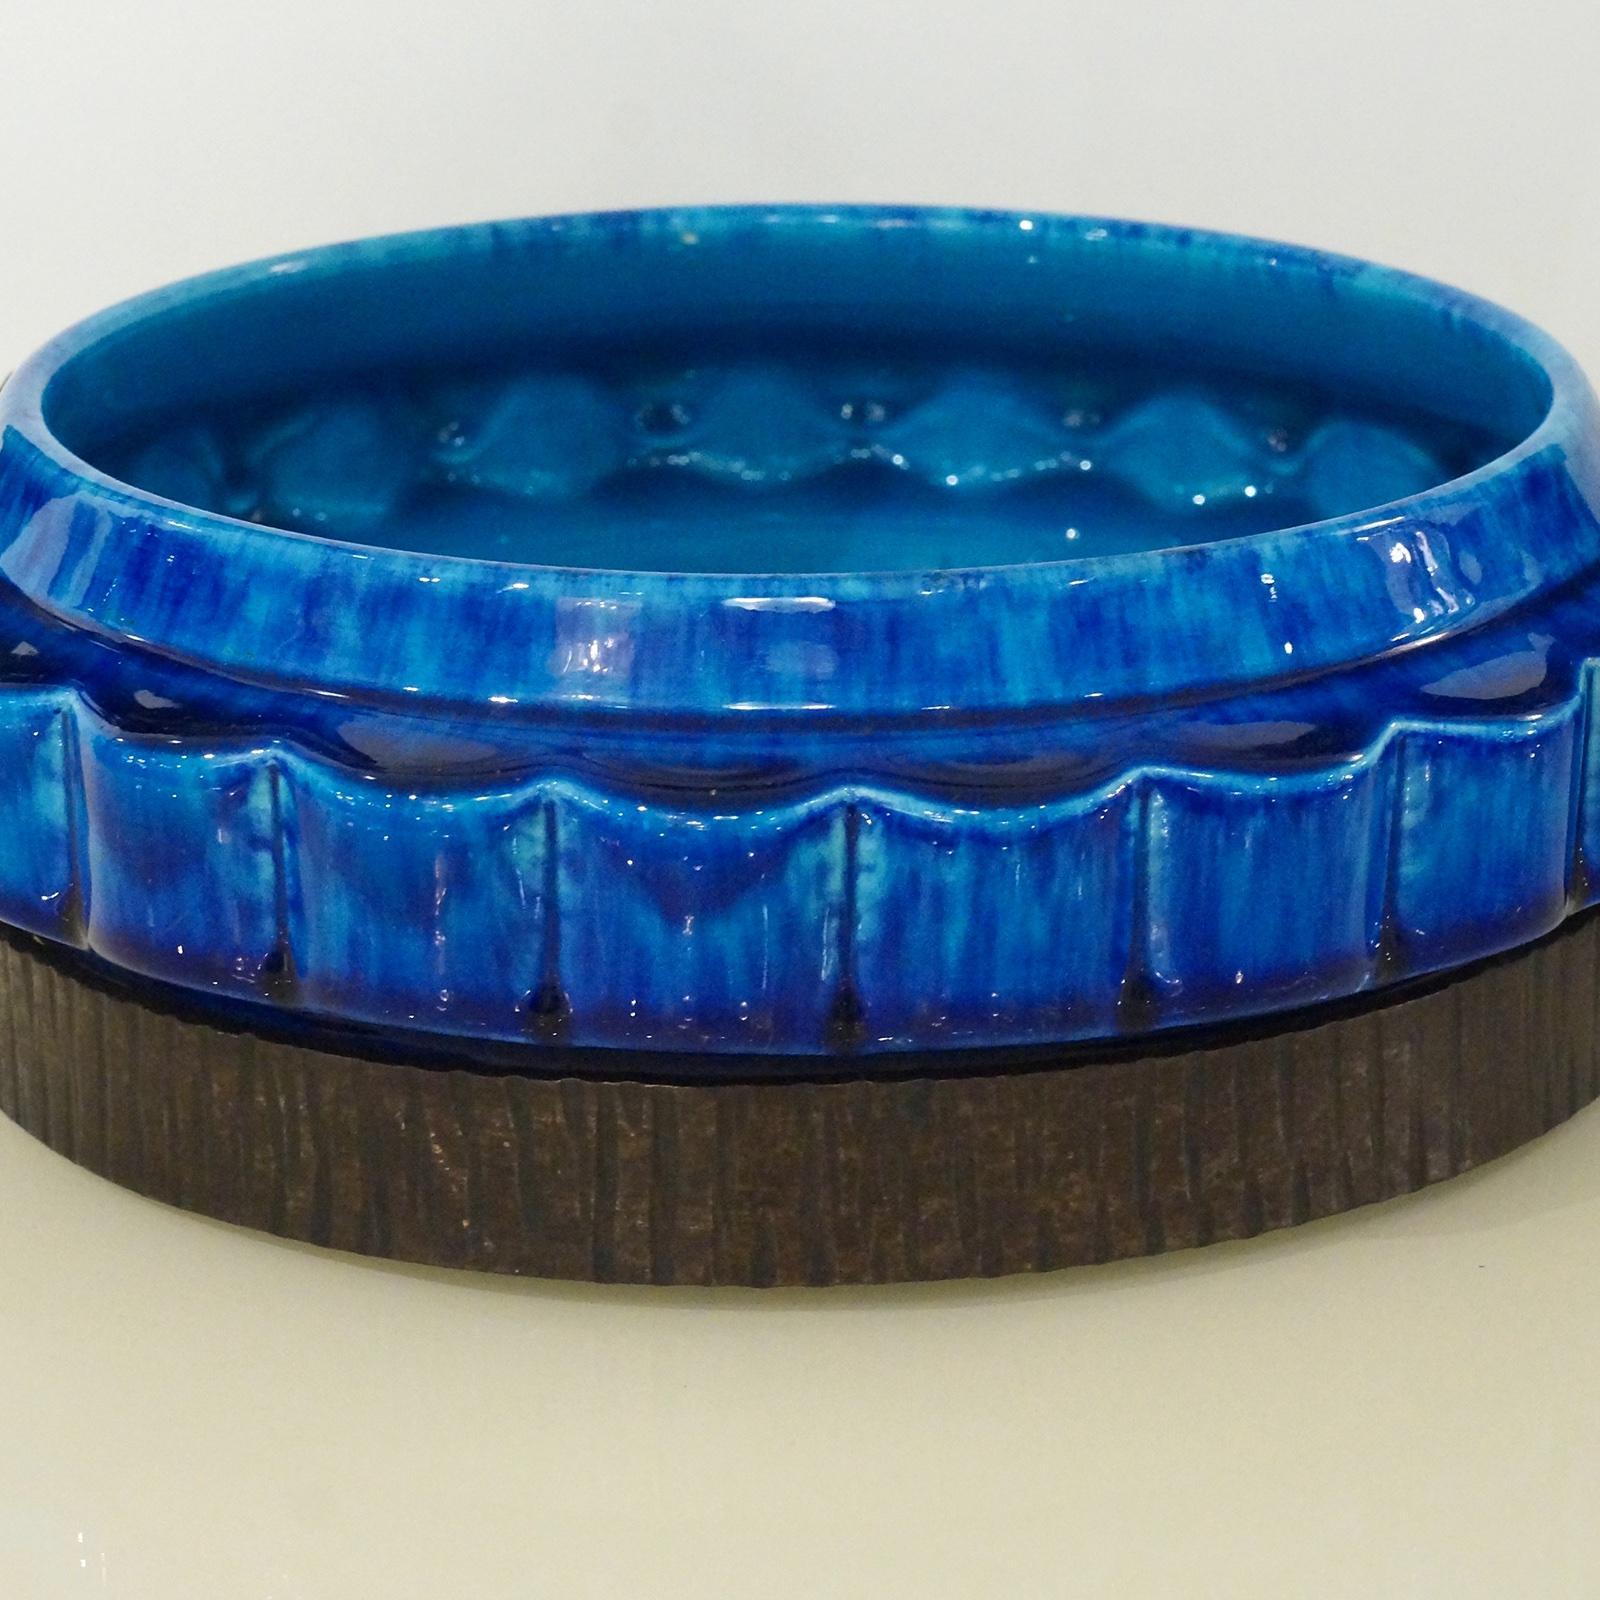 French Art Nouveau Paul Milet Sevres Ceramic Flower Wrought Iron Turquoise Bowl For Sale 5